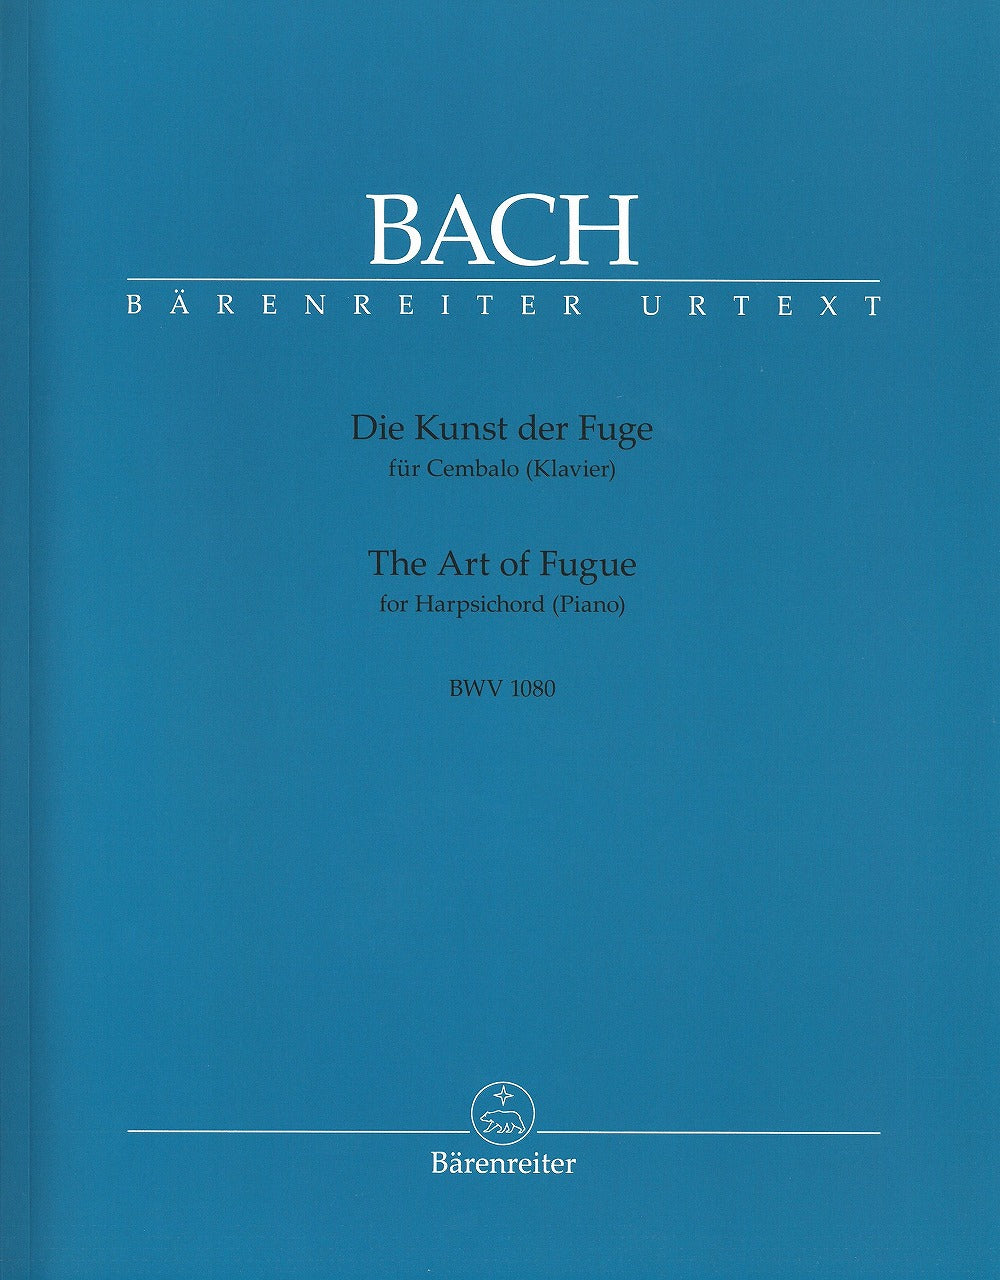 Die Kunst der Fuge BWV1080 - フーガの技法 BWV1080 - J.S.バッハ